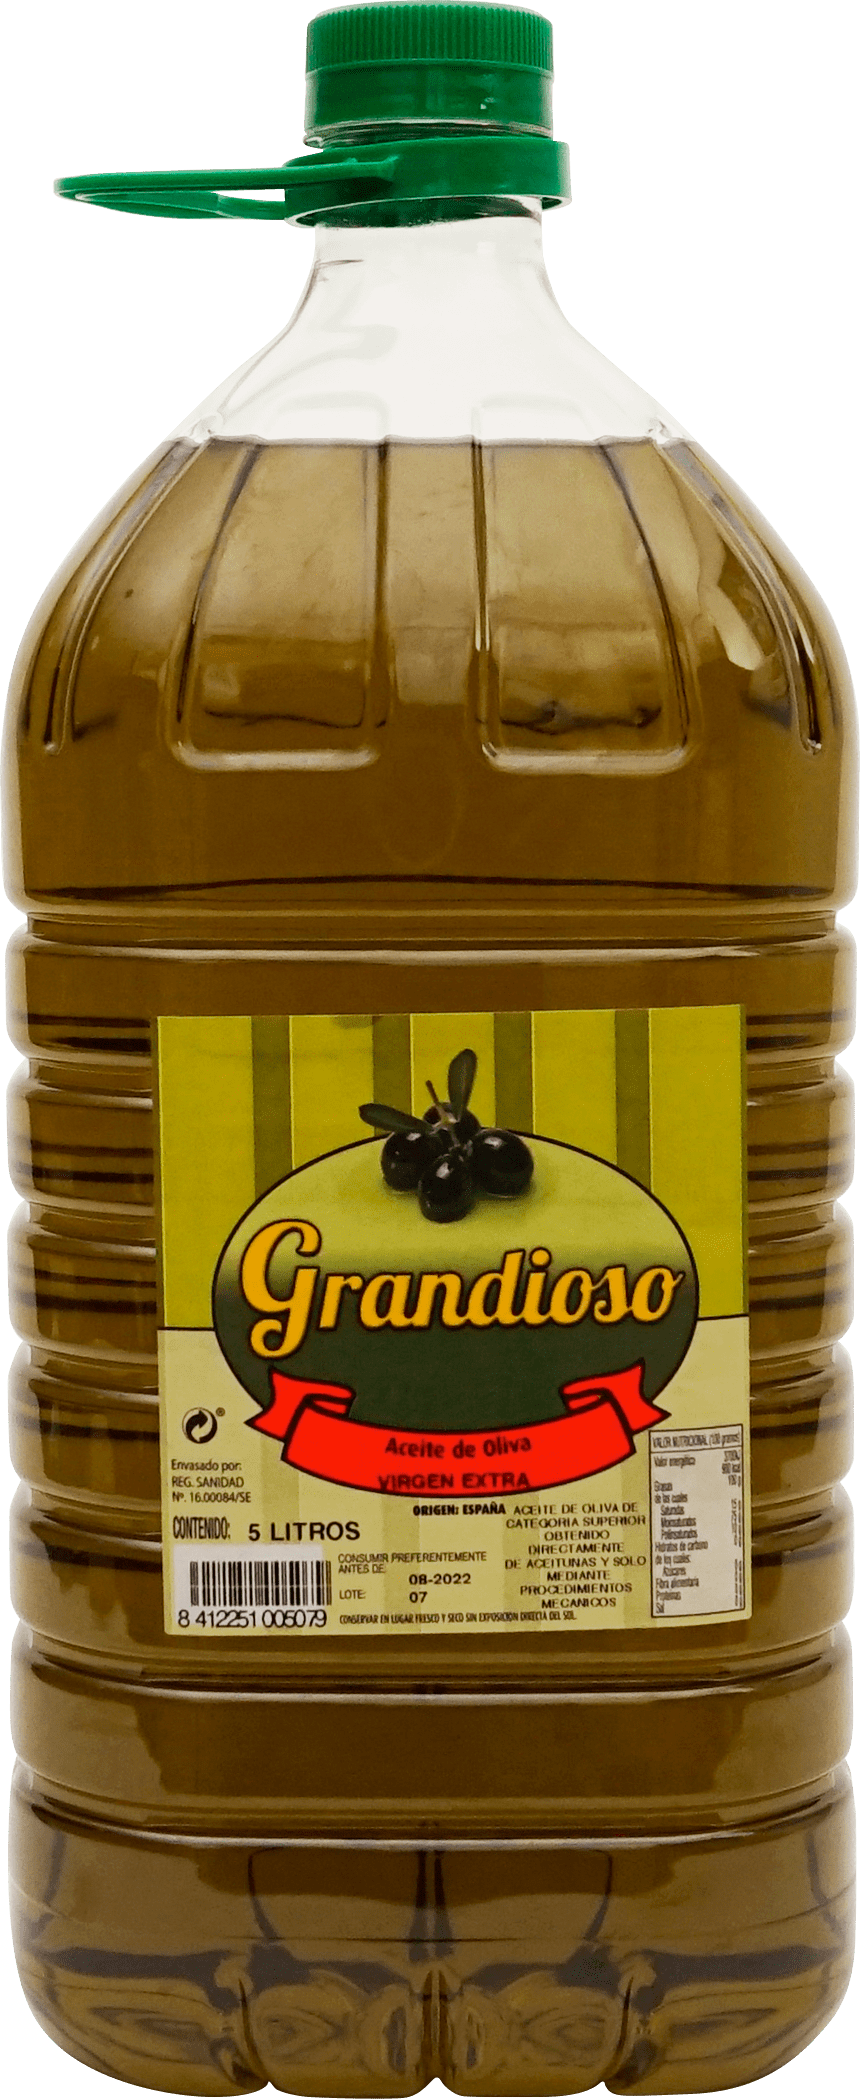 Aceite de oliva Virgen Extra Grandioso